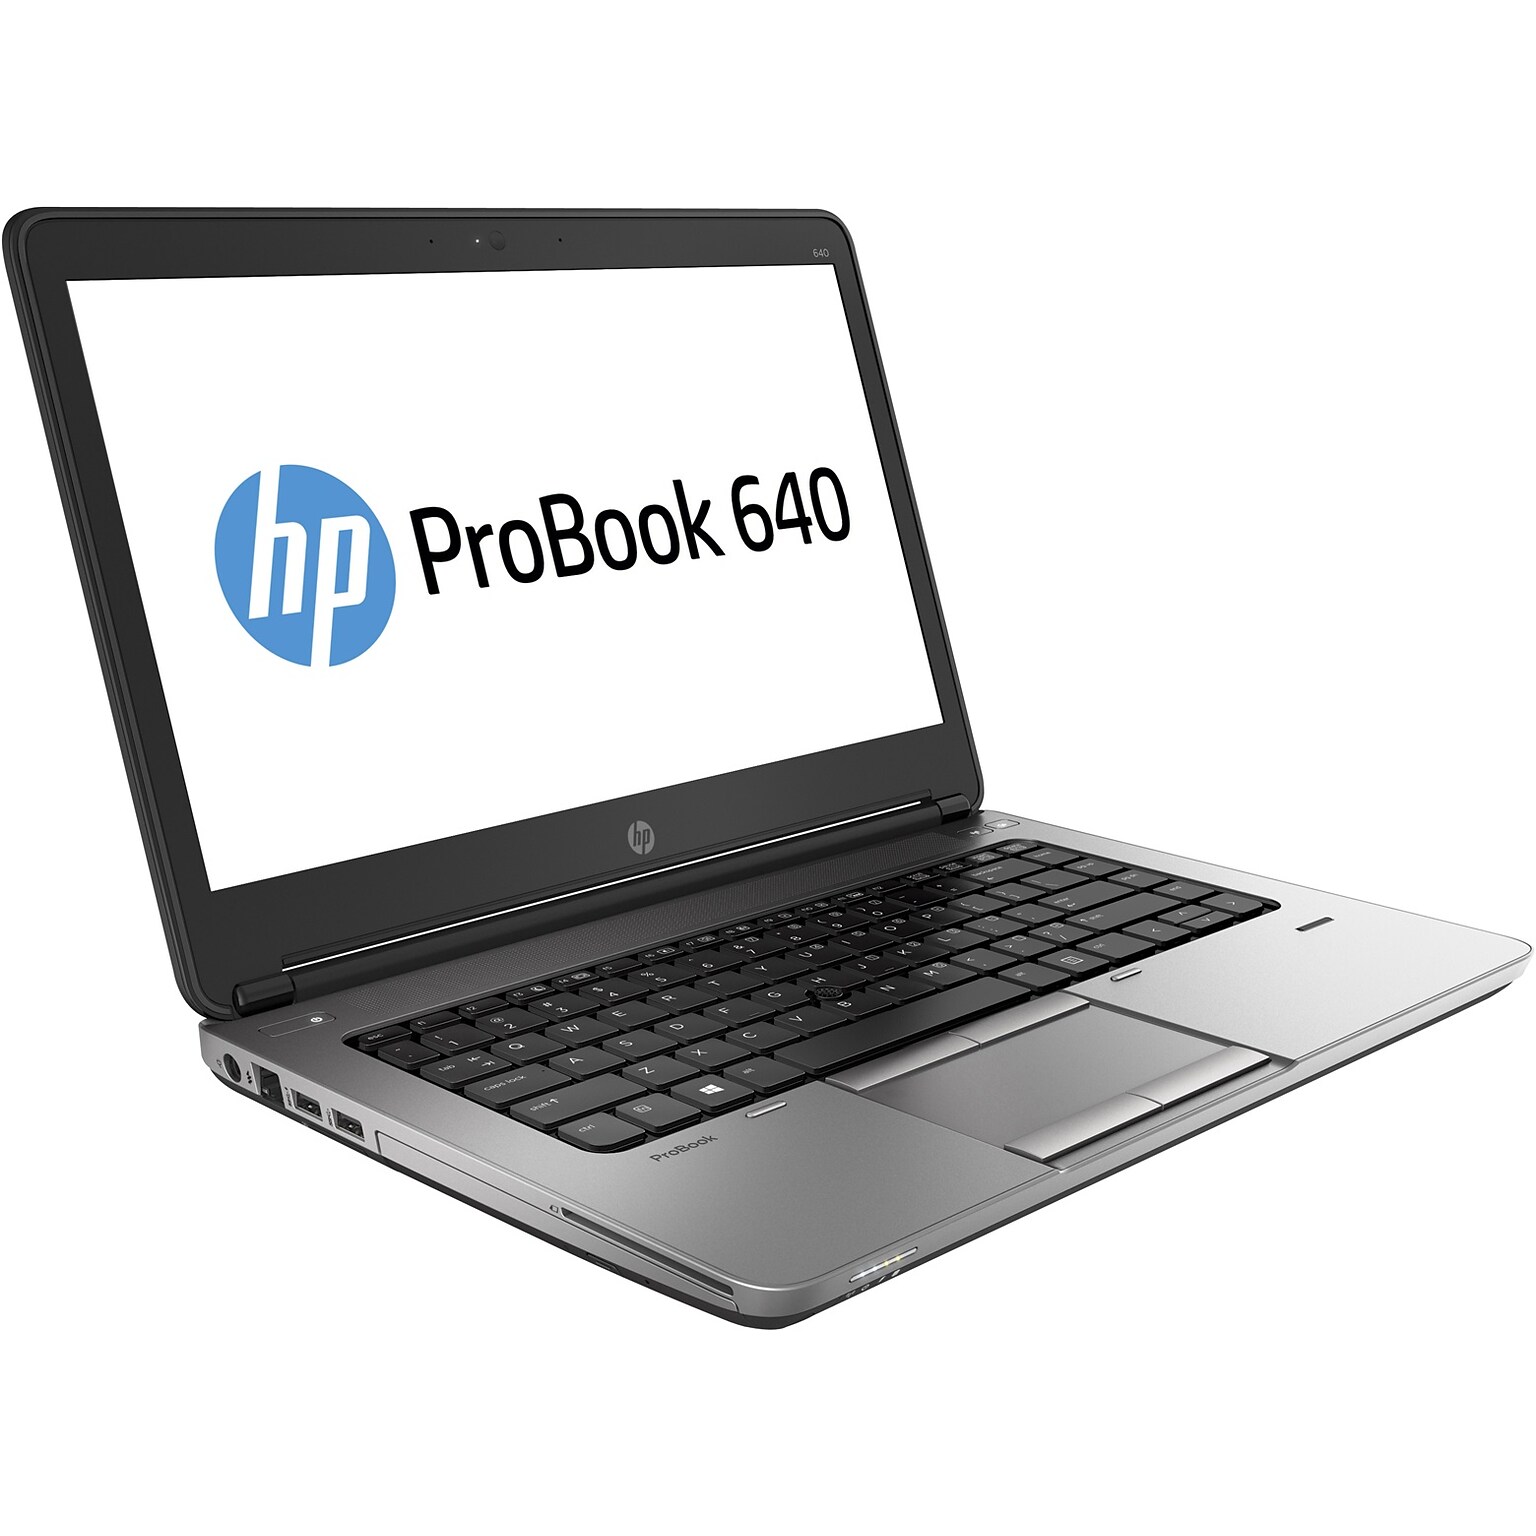 HP ProBook 640 G1 14 Refurbished Laptop, Intel i5 4210M 2.6GHz Processor, 12GB Memory, 180GB SSD, Windows 10 Pro